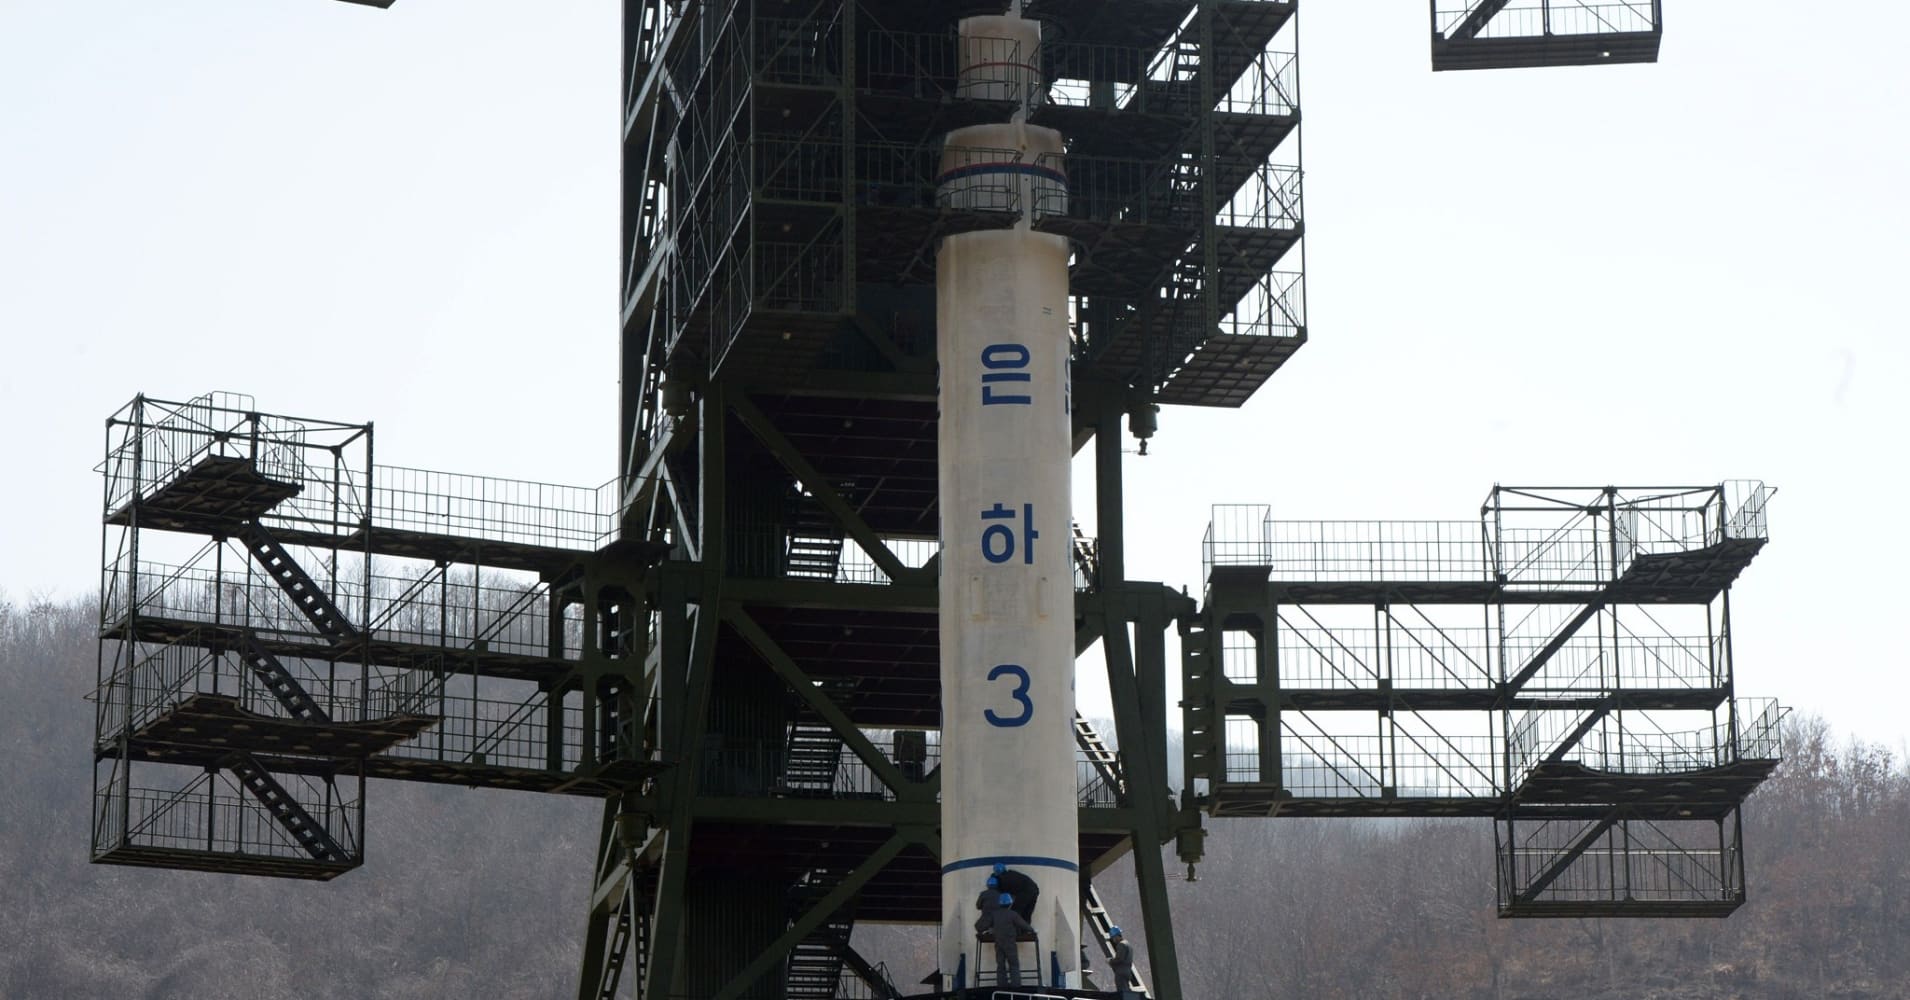 North Korea rebuilding long-range rocket site, photos show